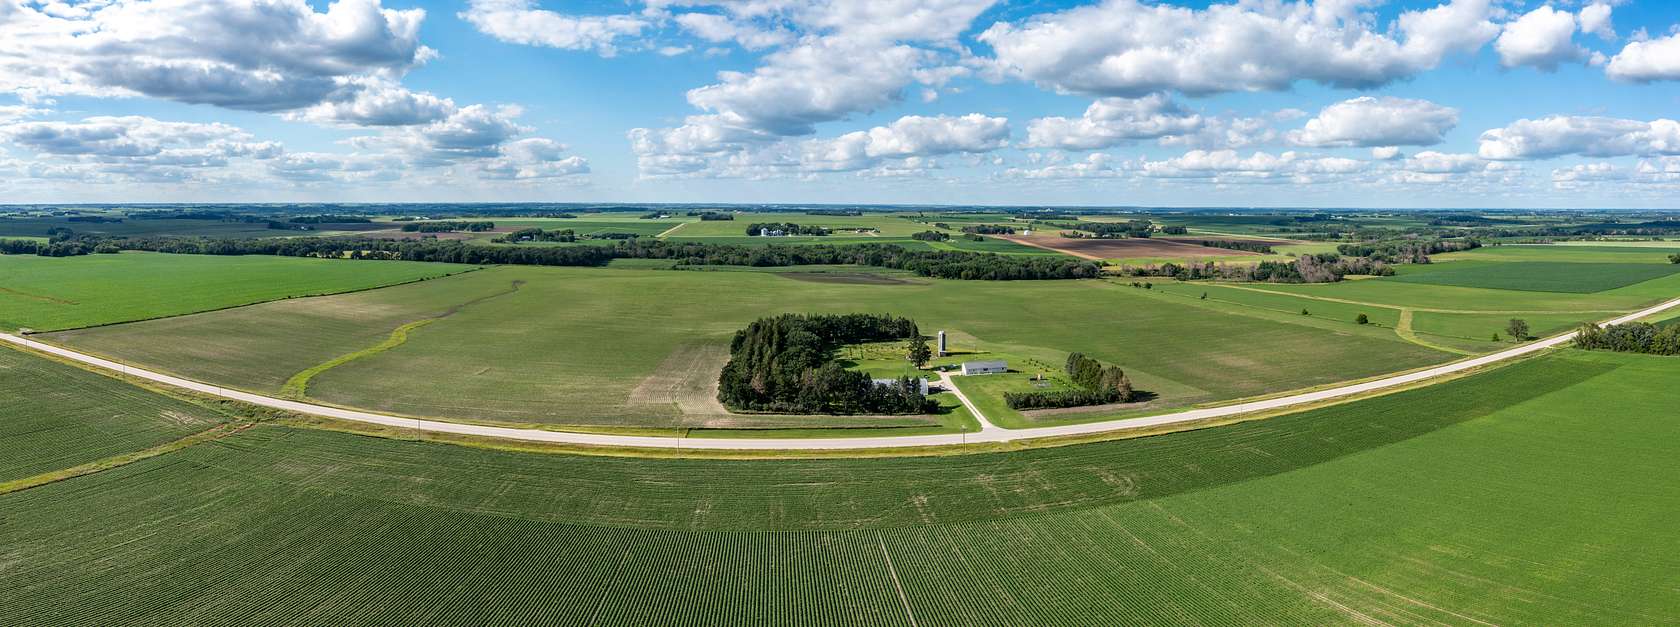 149.89 Acres of Land for Sale in Stewartville, Minnesota